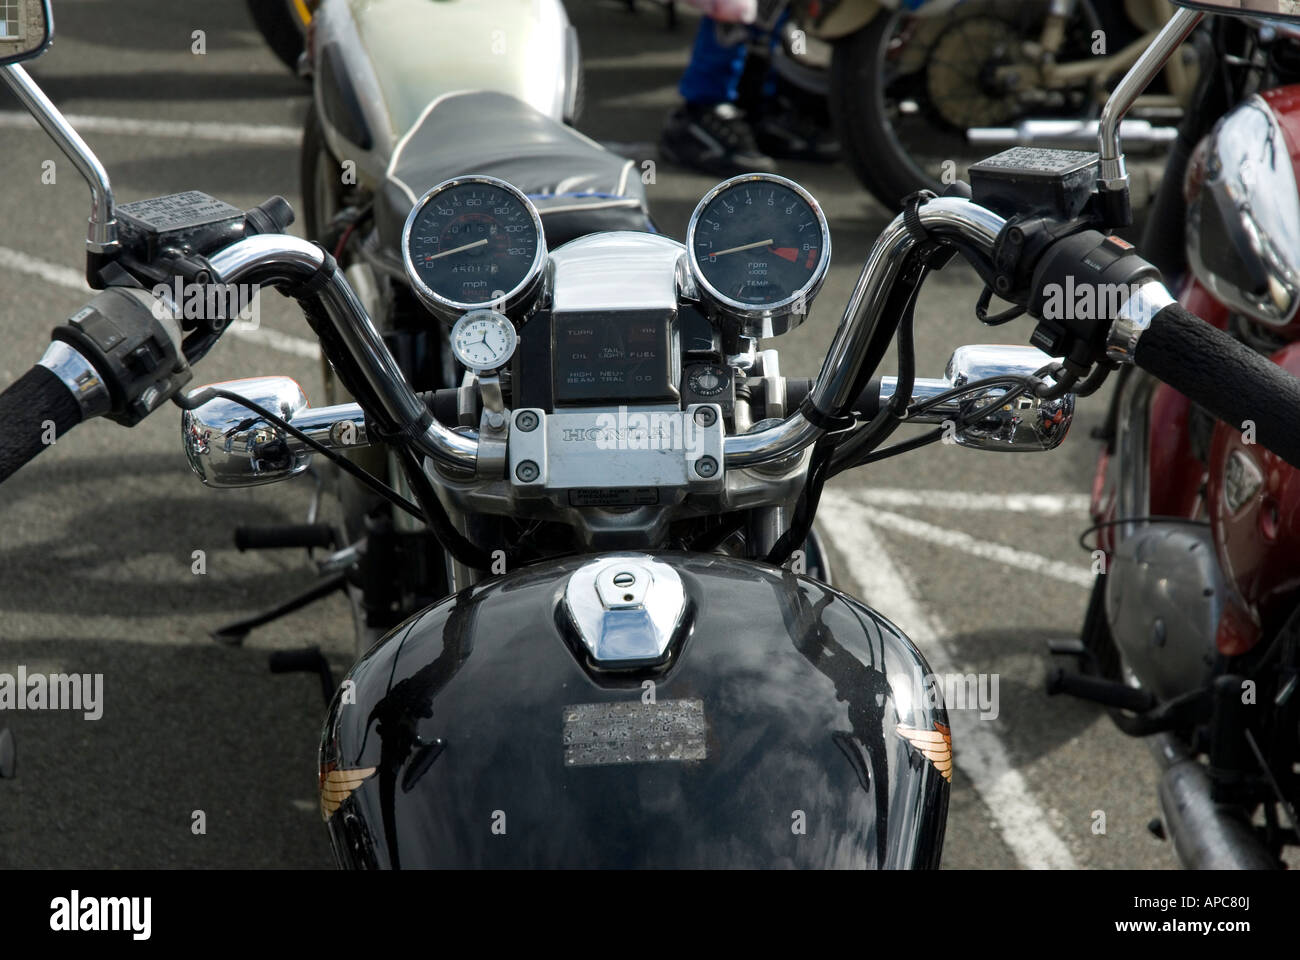 Honda Bike High Resolution Stock Photography And Images Alamy